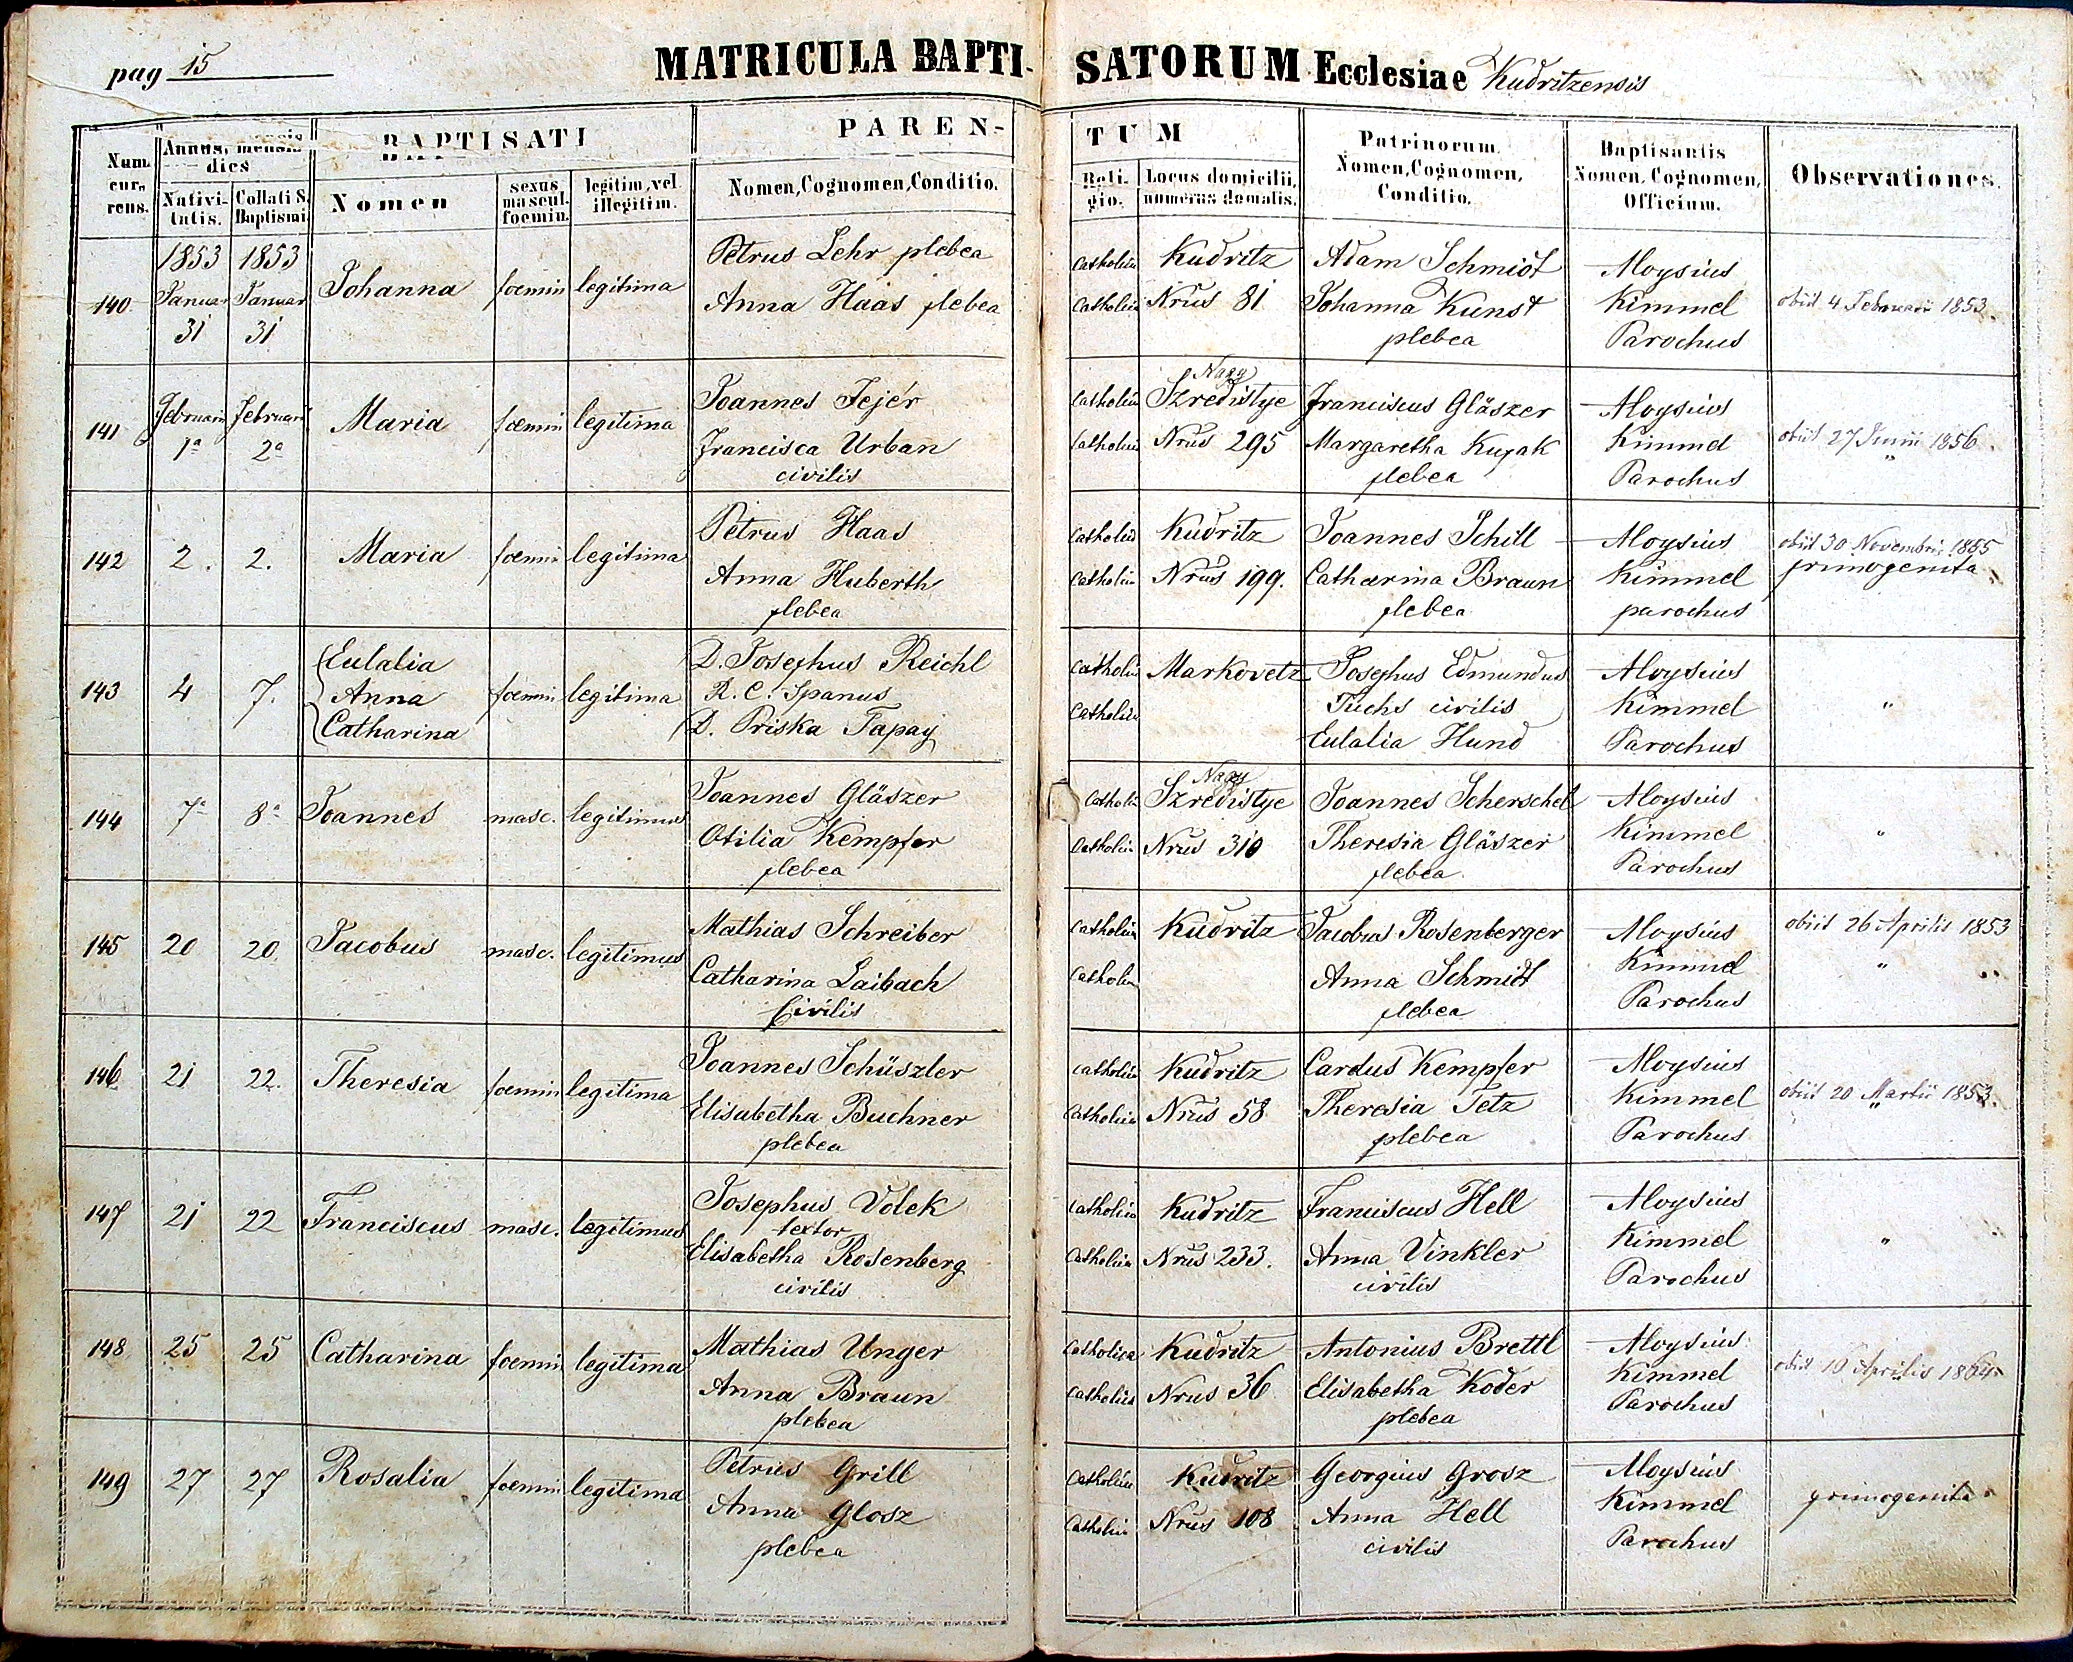 images/church_records/BIRTHS/1852-1870B/015